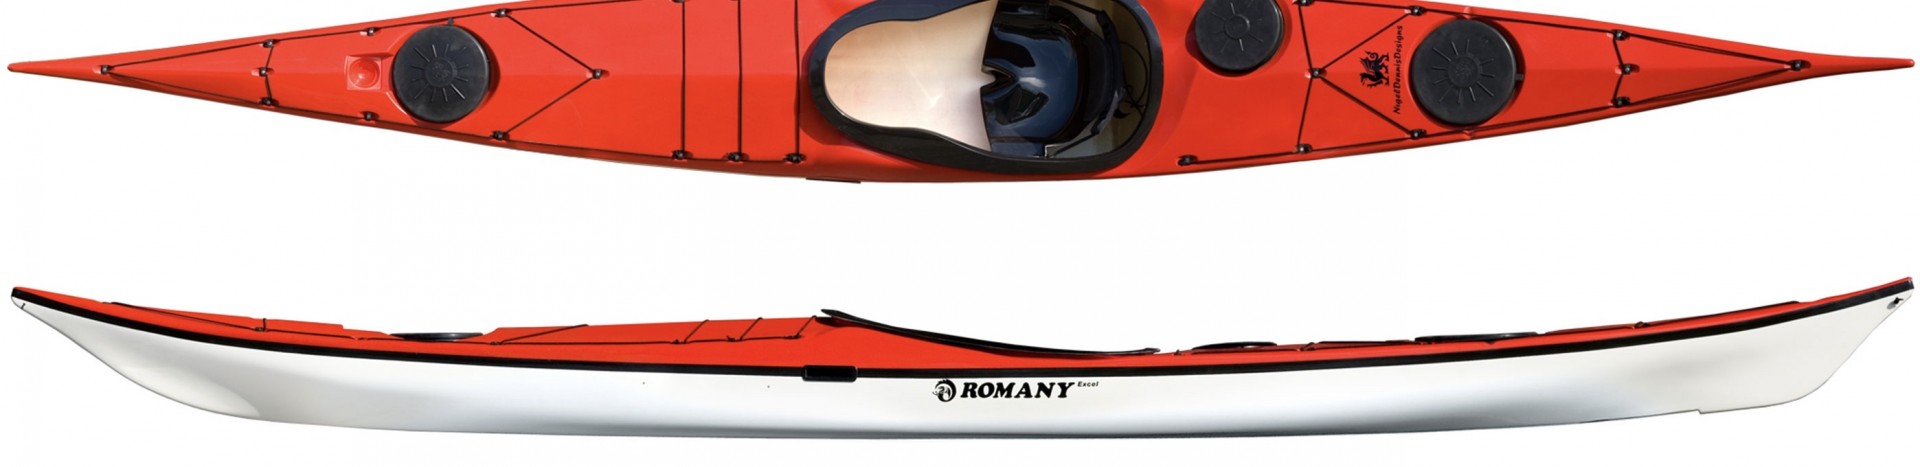 NDK Romany Excel sea kayak